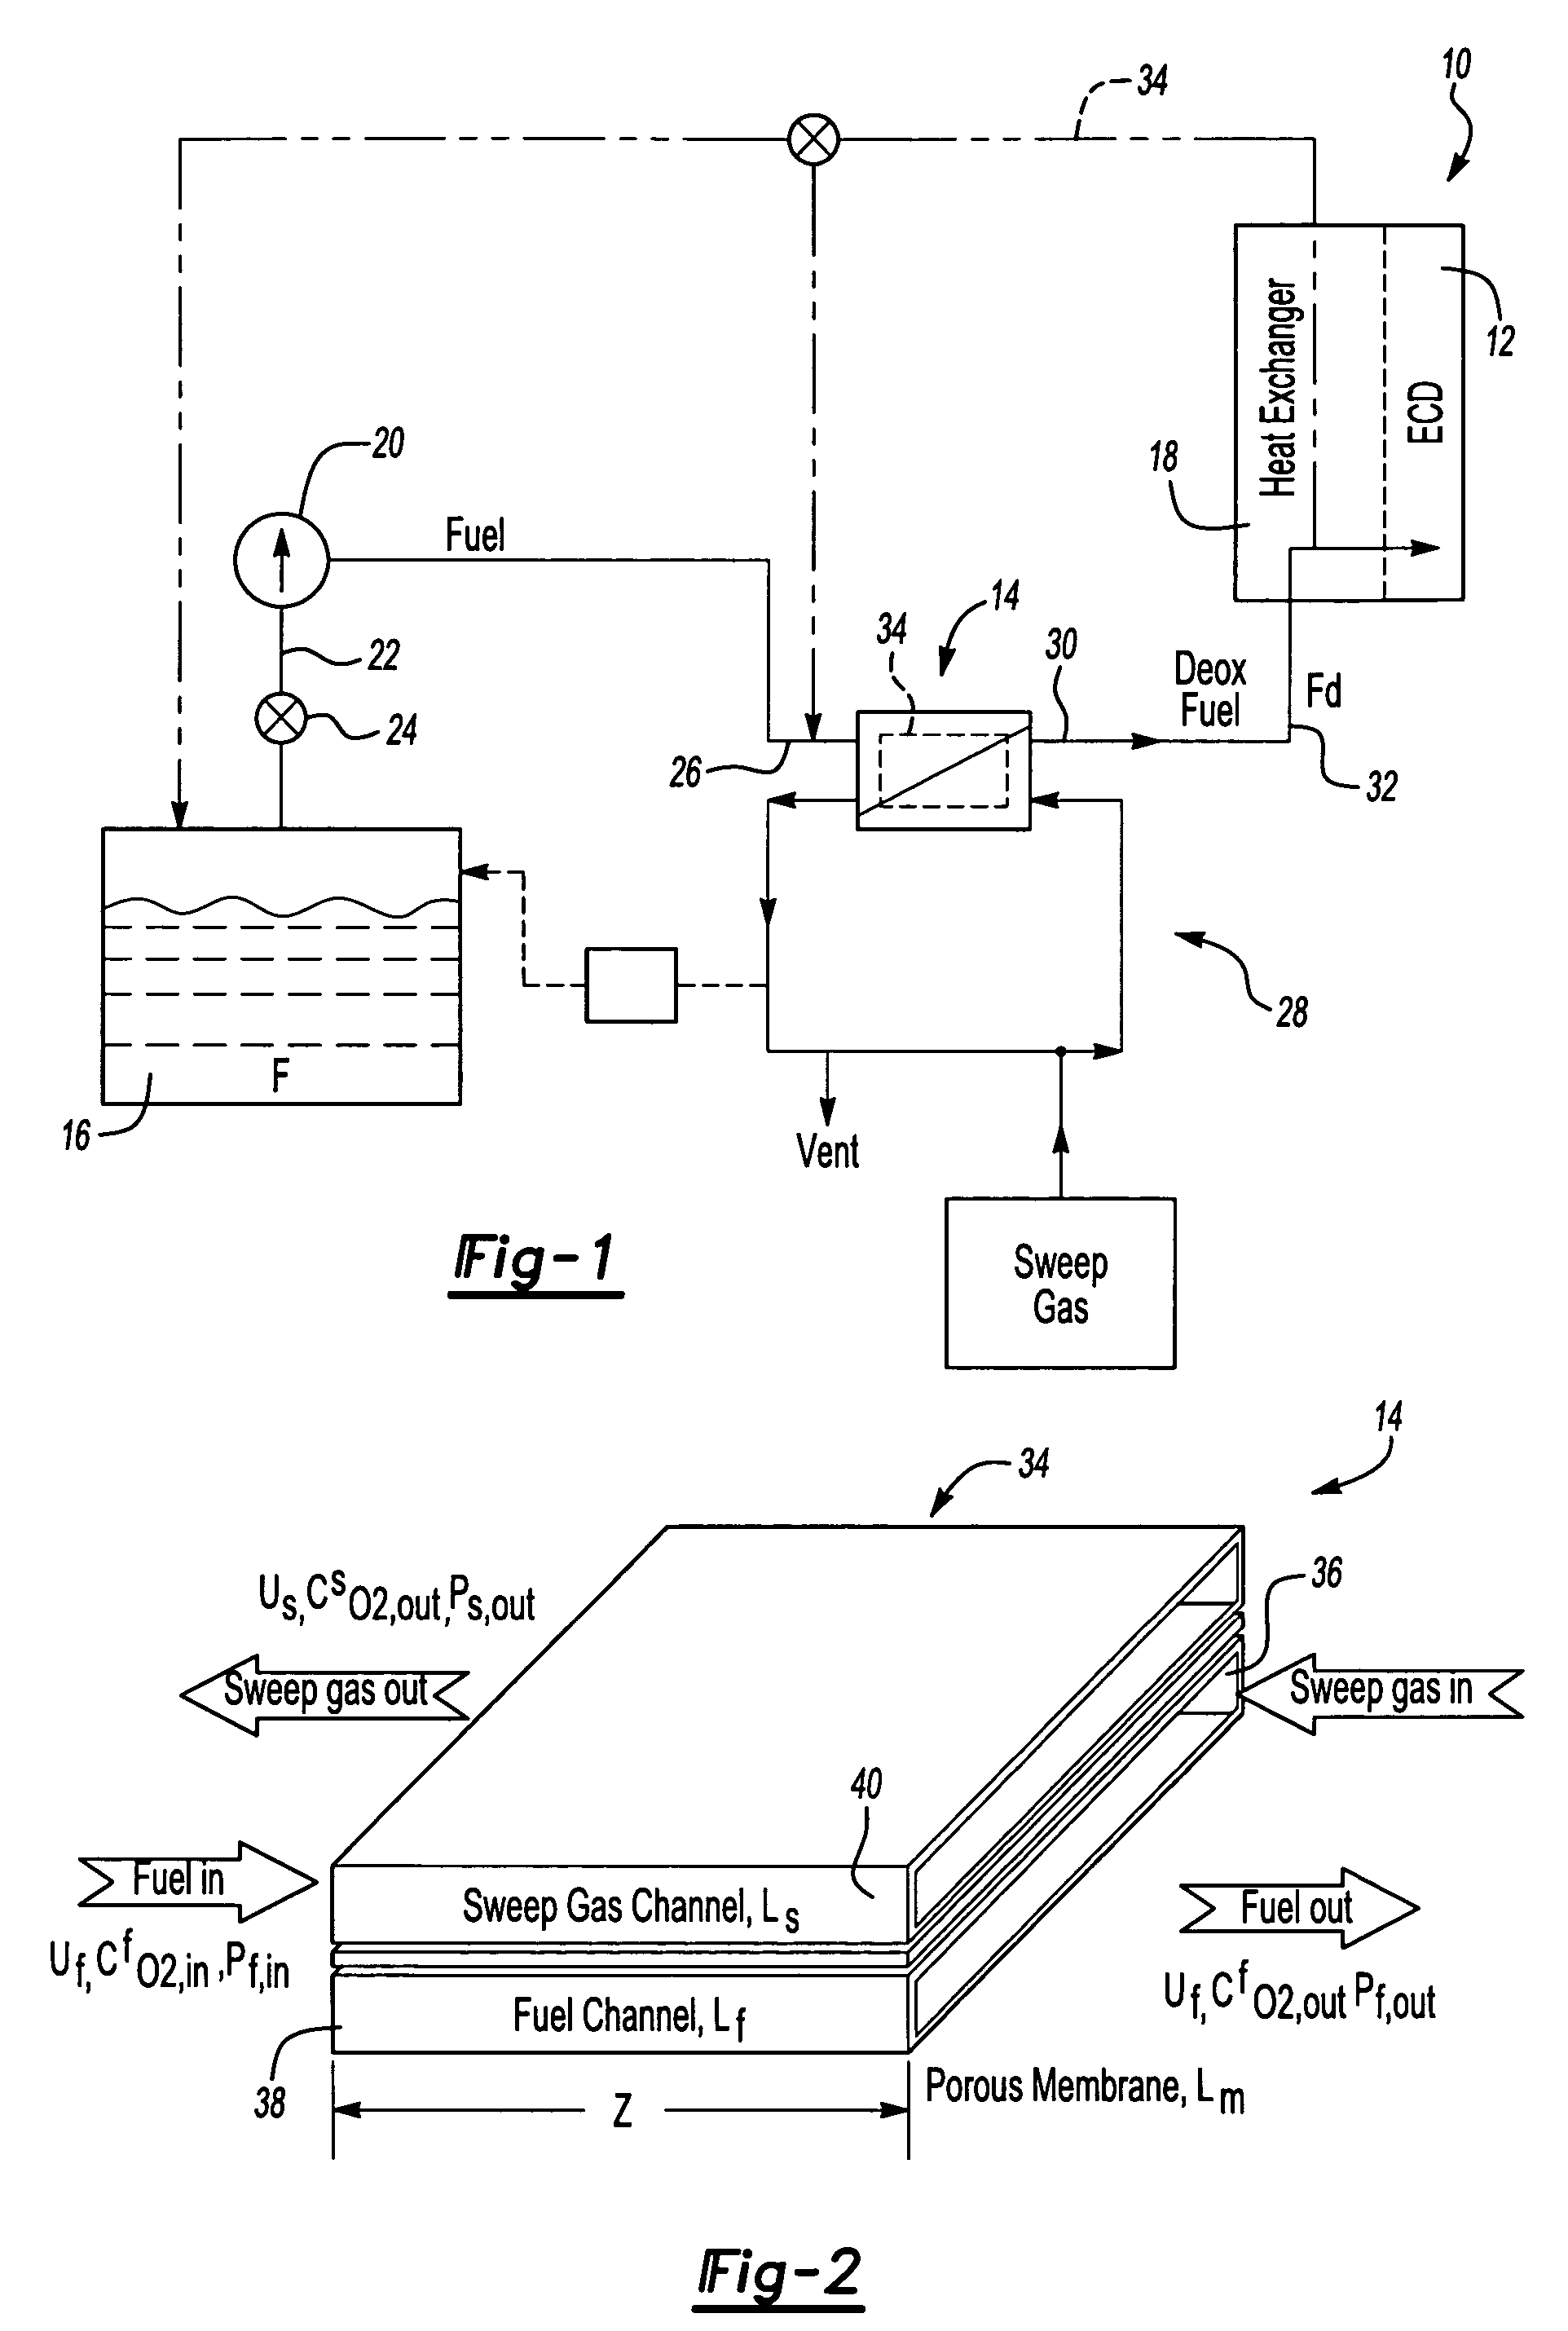 Fuel deoxygenation system